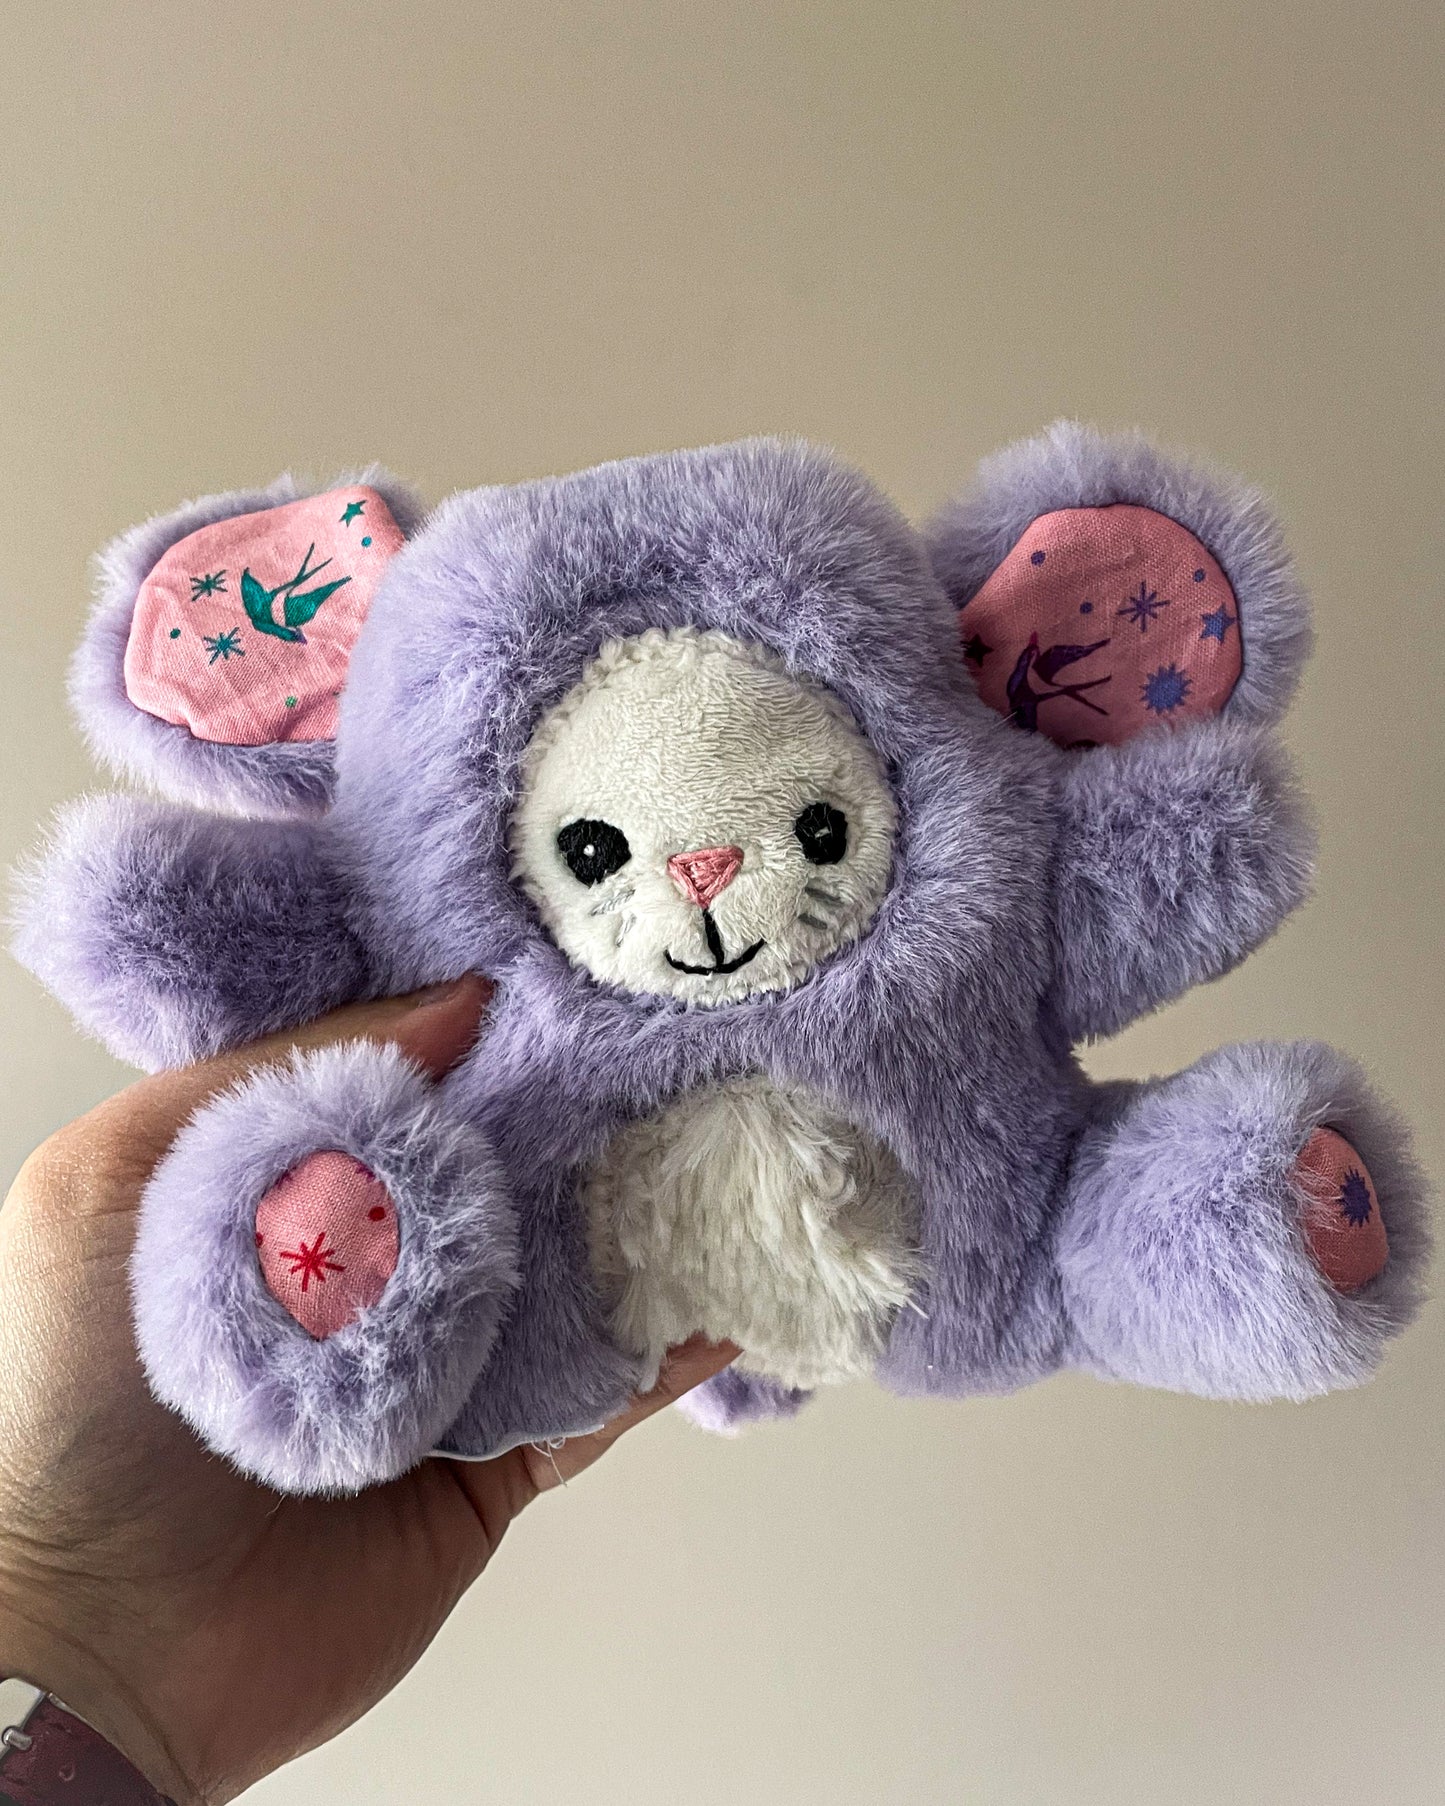 Fairy Mouse - Handmade Stuffed Animal Plush